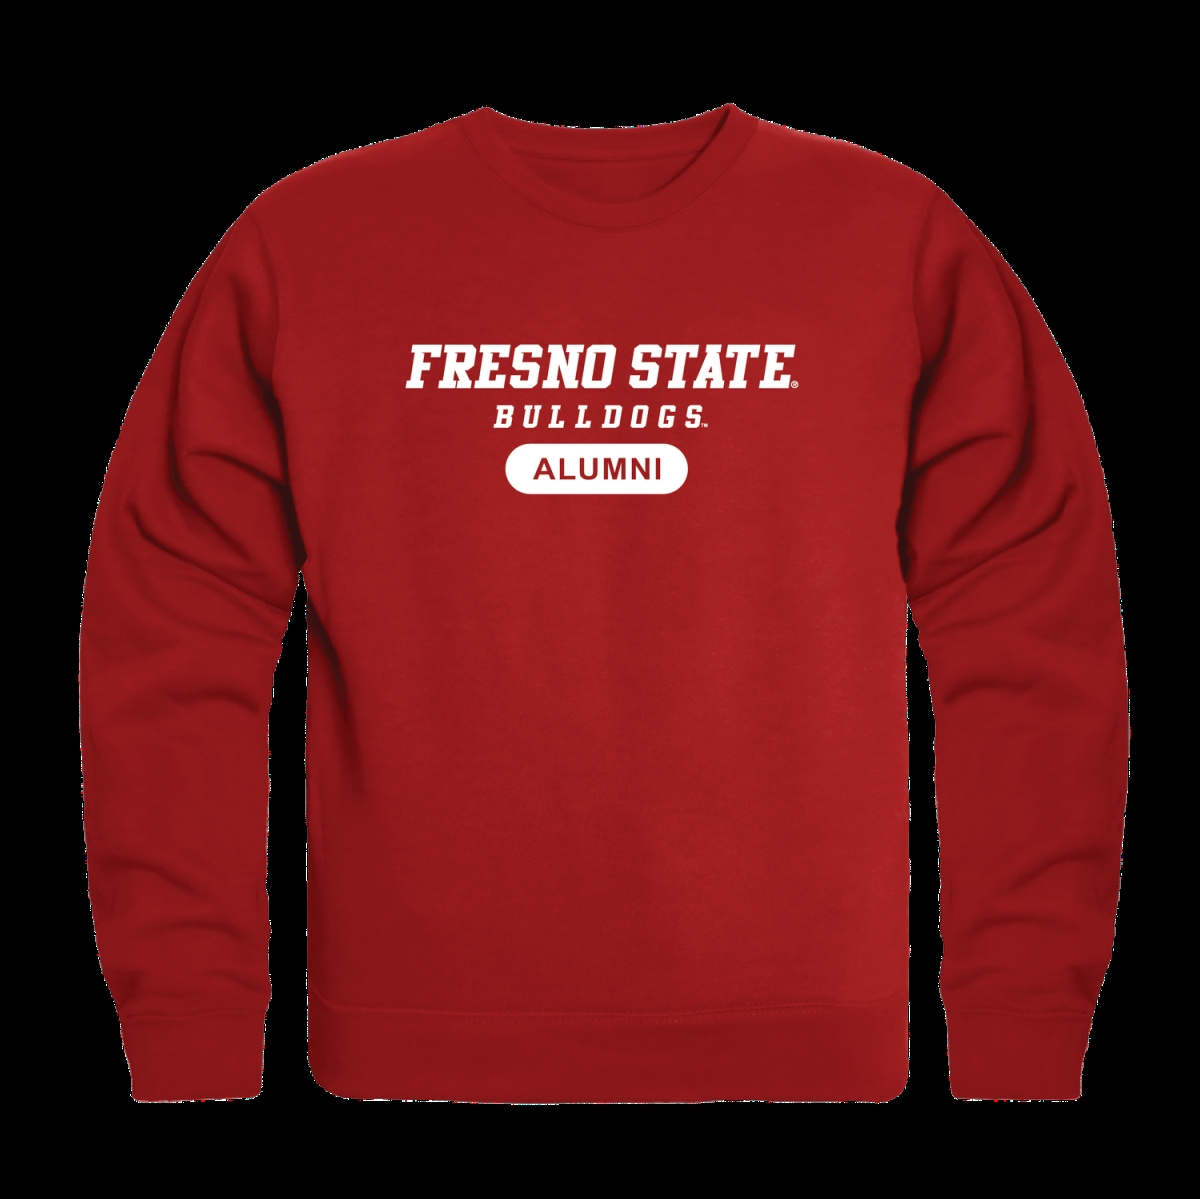 560-169-RED-02 California State University, Fresno Bulldogs Alumni Fleece Pullover Crewneck Sweatshirt, Red - Medium -  W Republic